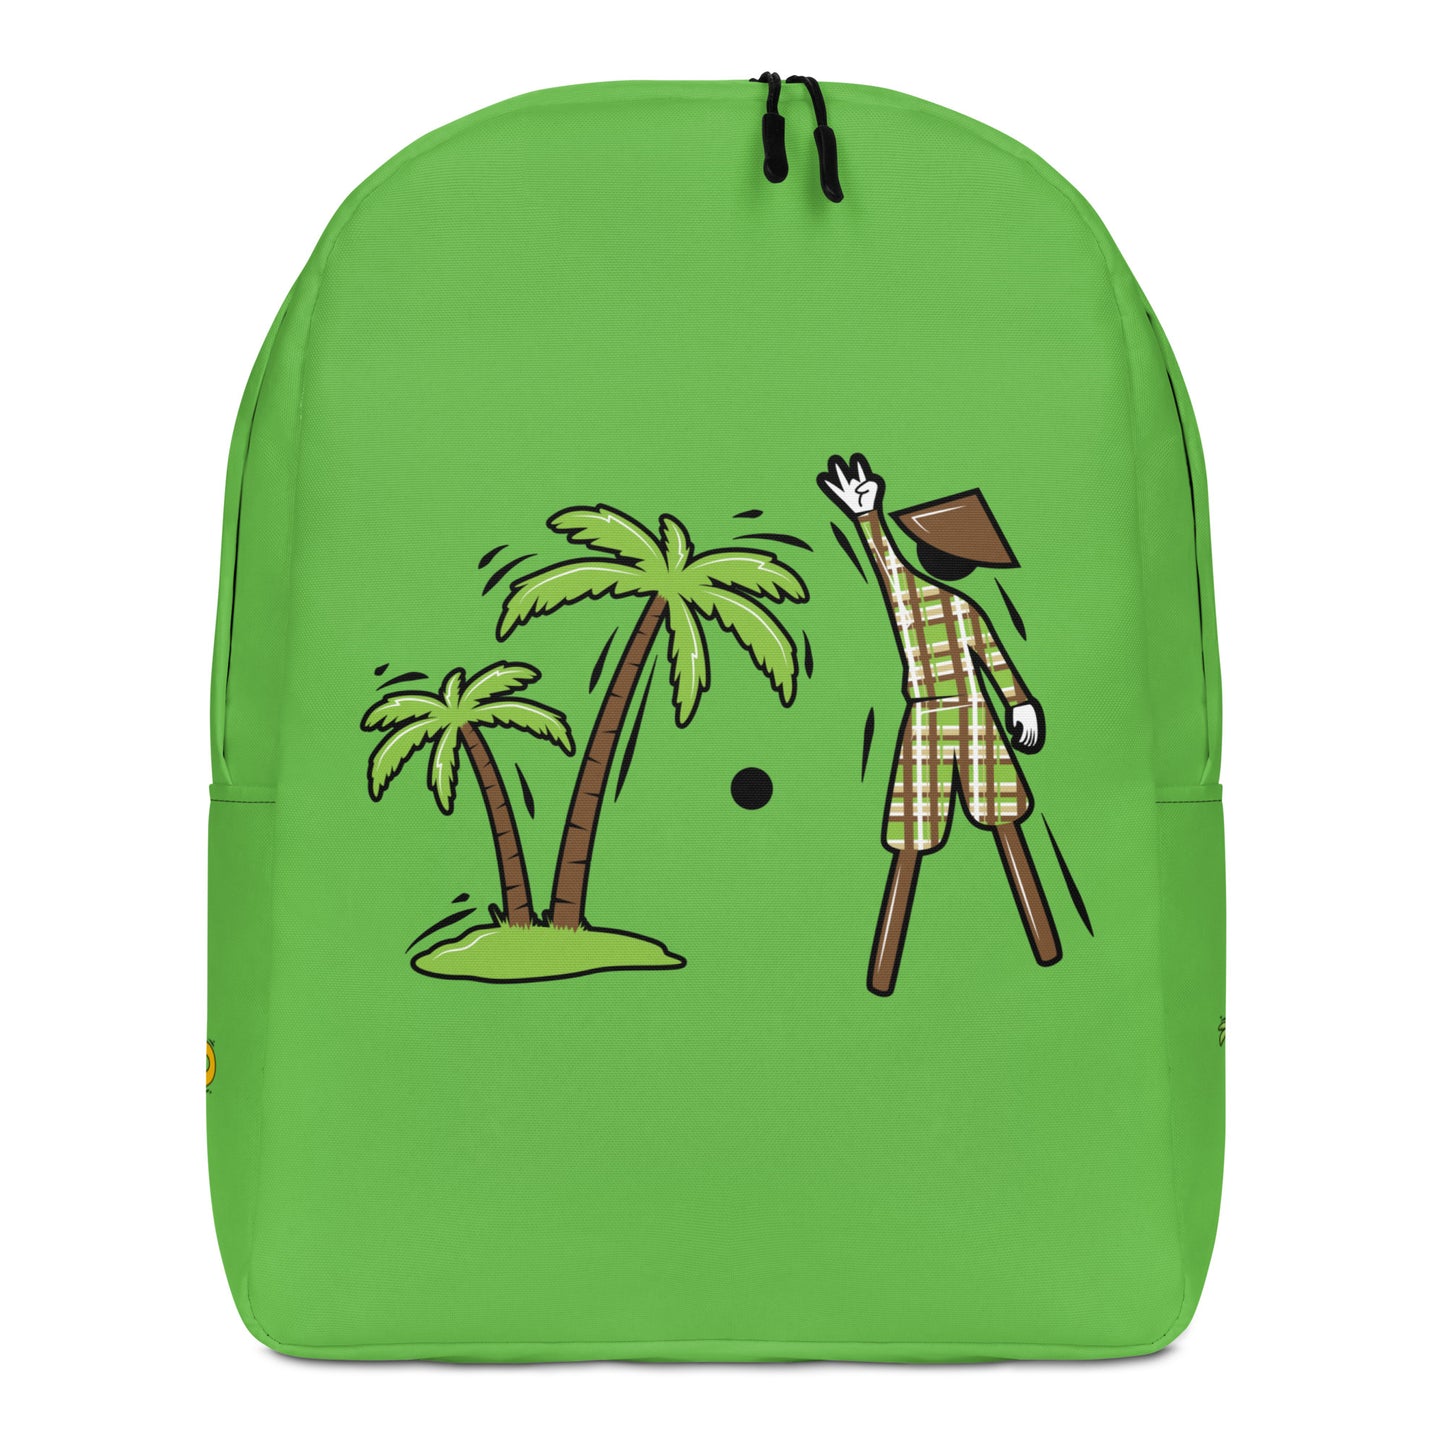 Green V.Localized  (Regular) backpack